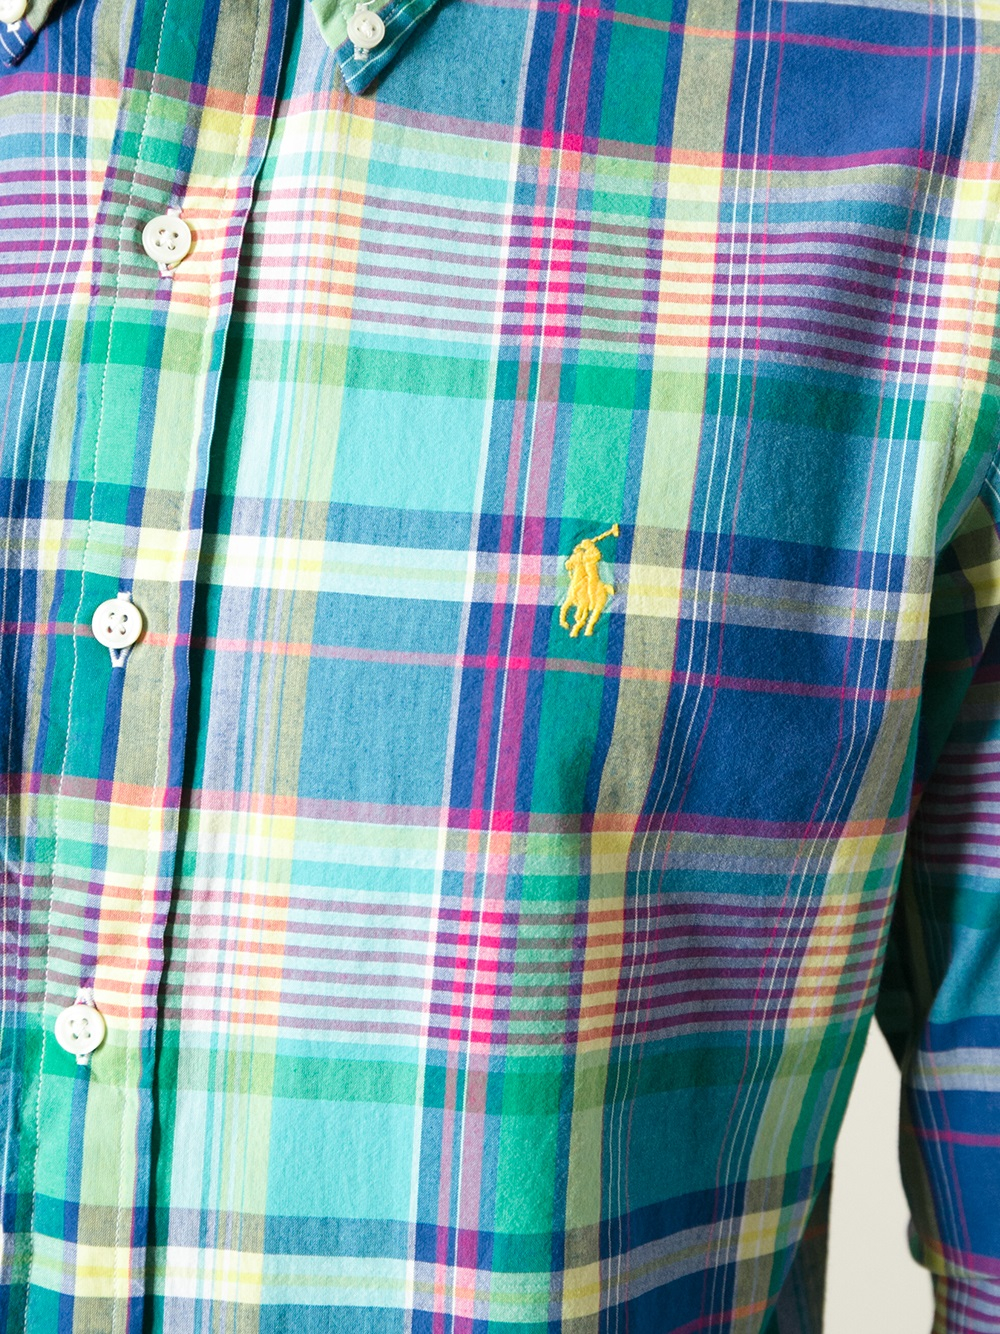 Polo Ralph Lauren Plaid Shirt for Men - Lyst